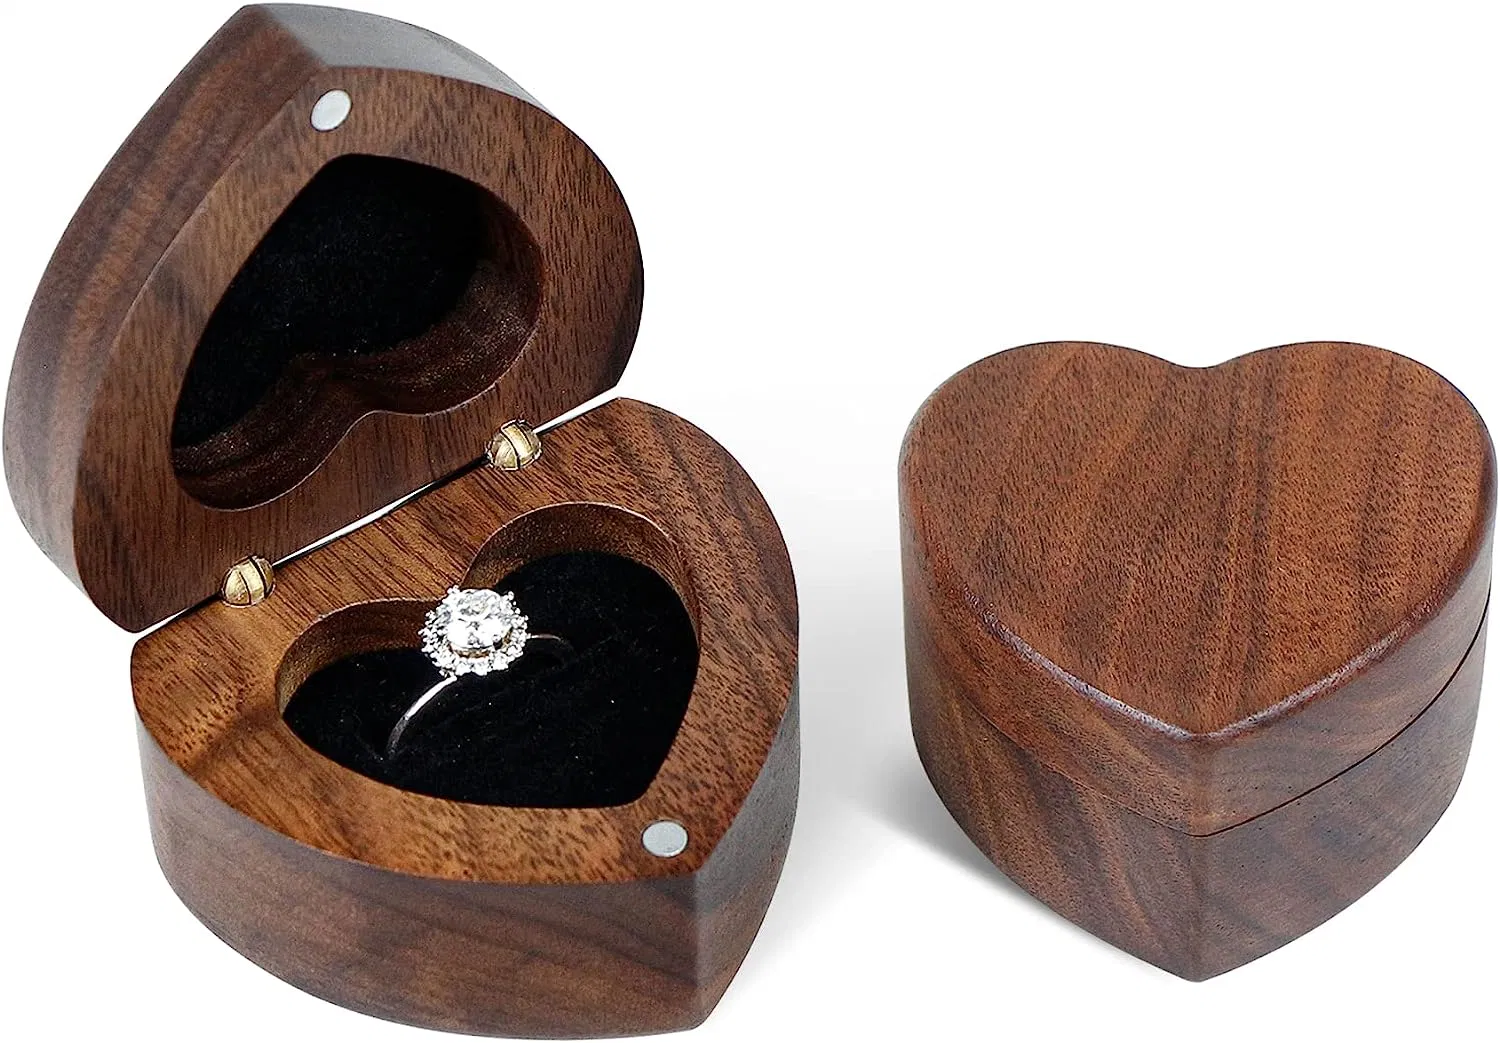 Caixa circular de engate em madeira pequena caixa circular plana fina para proposta, casamento